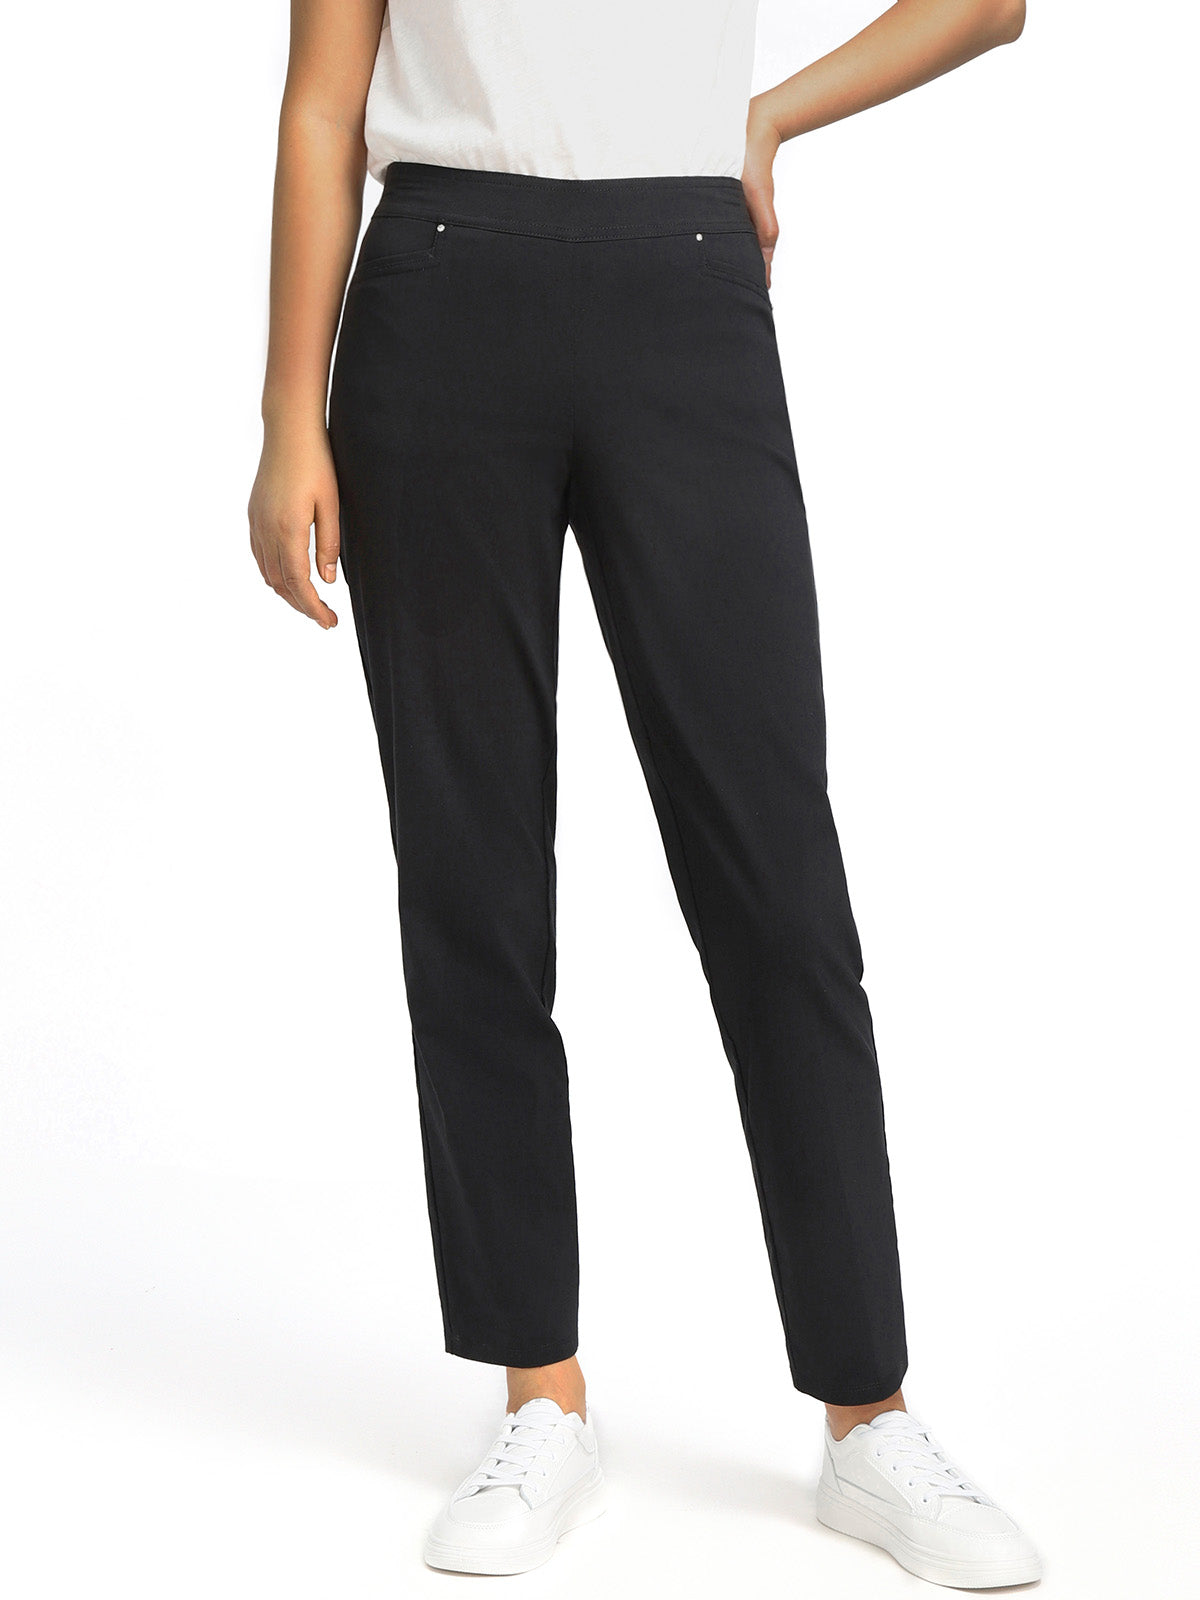 NWT Retrology Women Black Pants Comfort Waist Stretch w/ Button